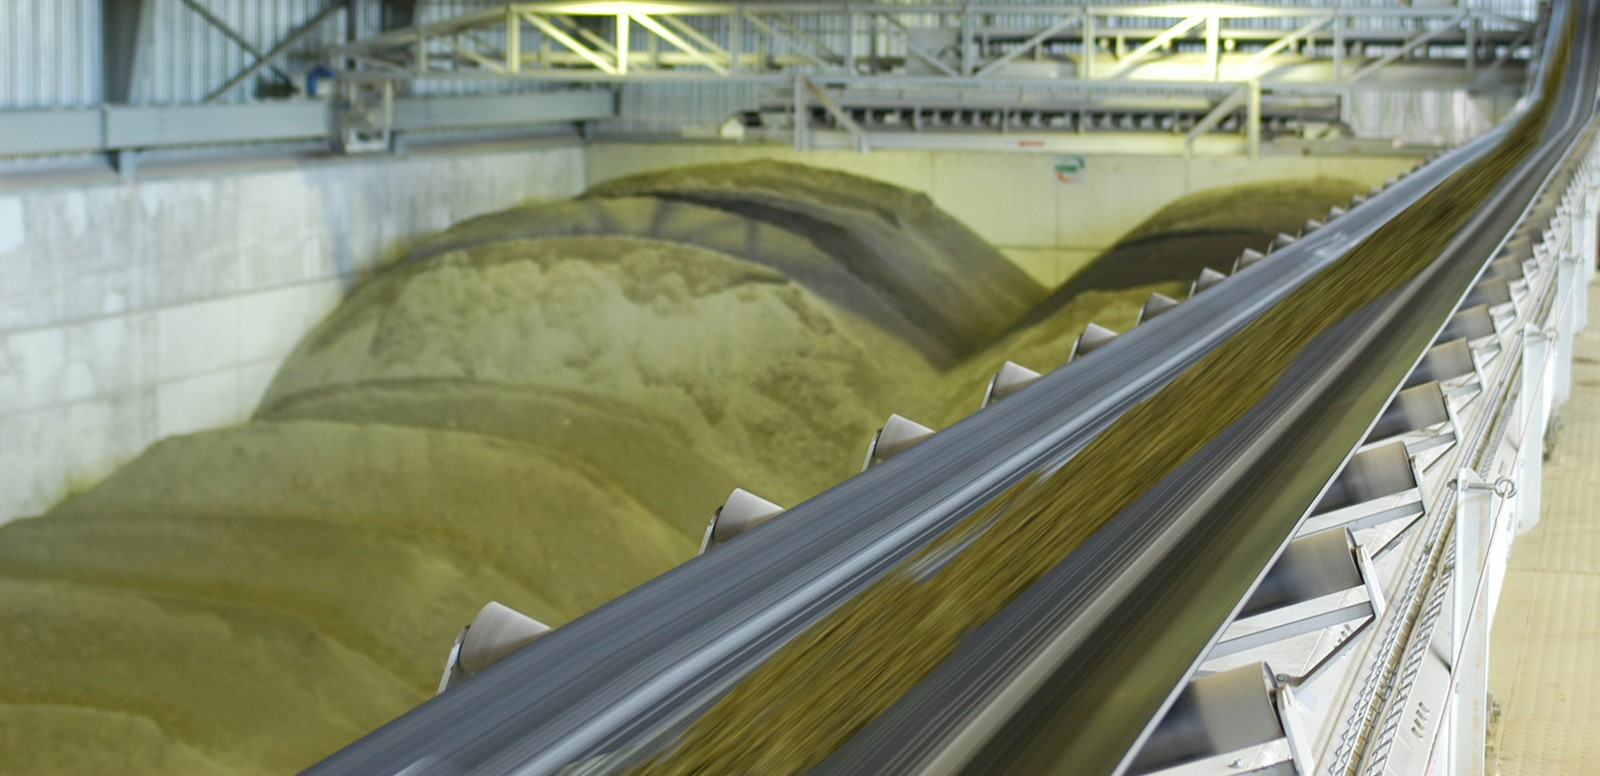 energy from waste facility conveyor belt